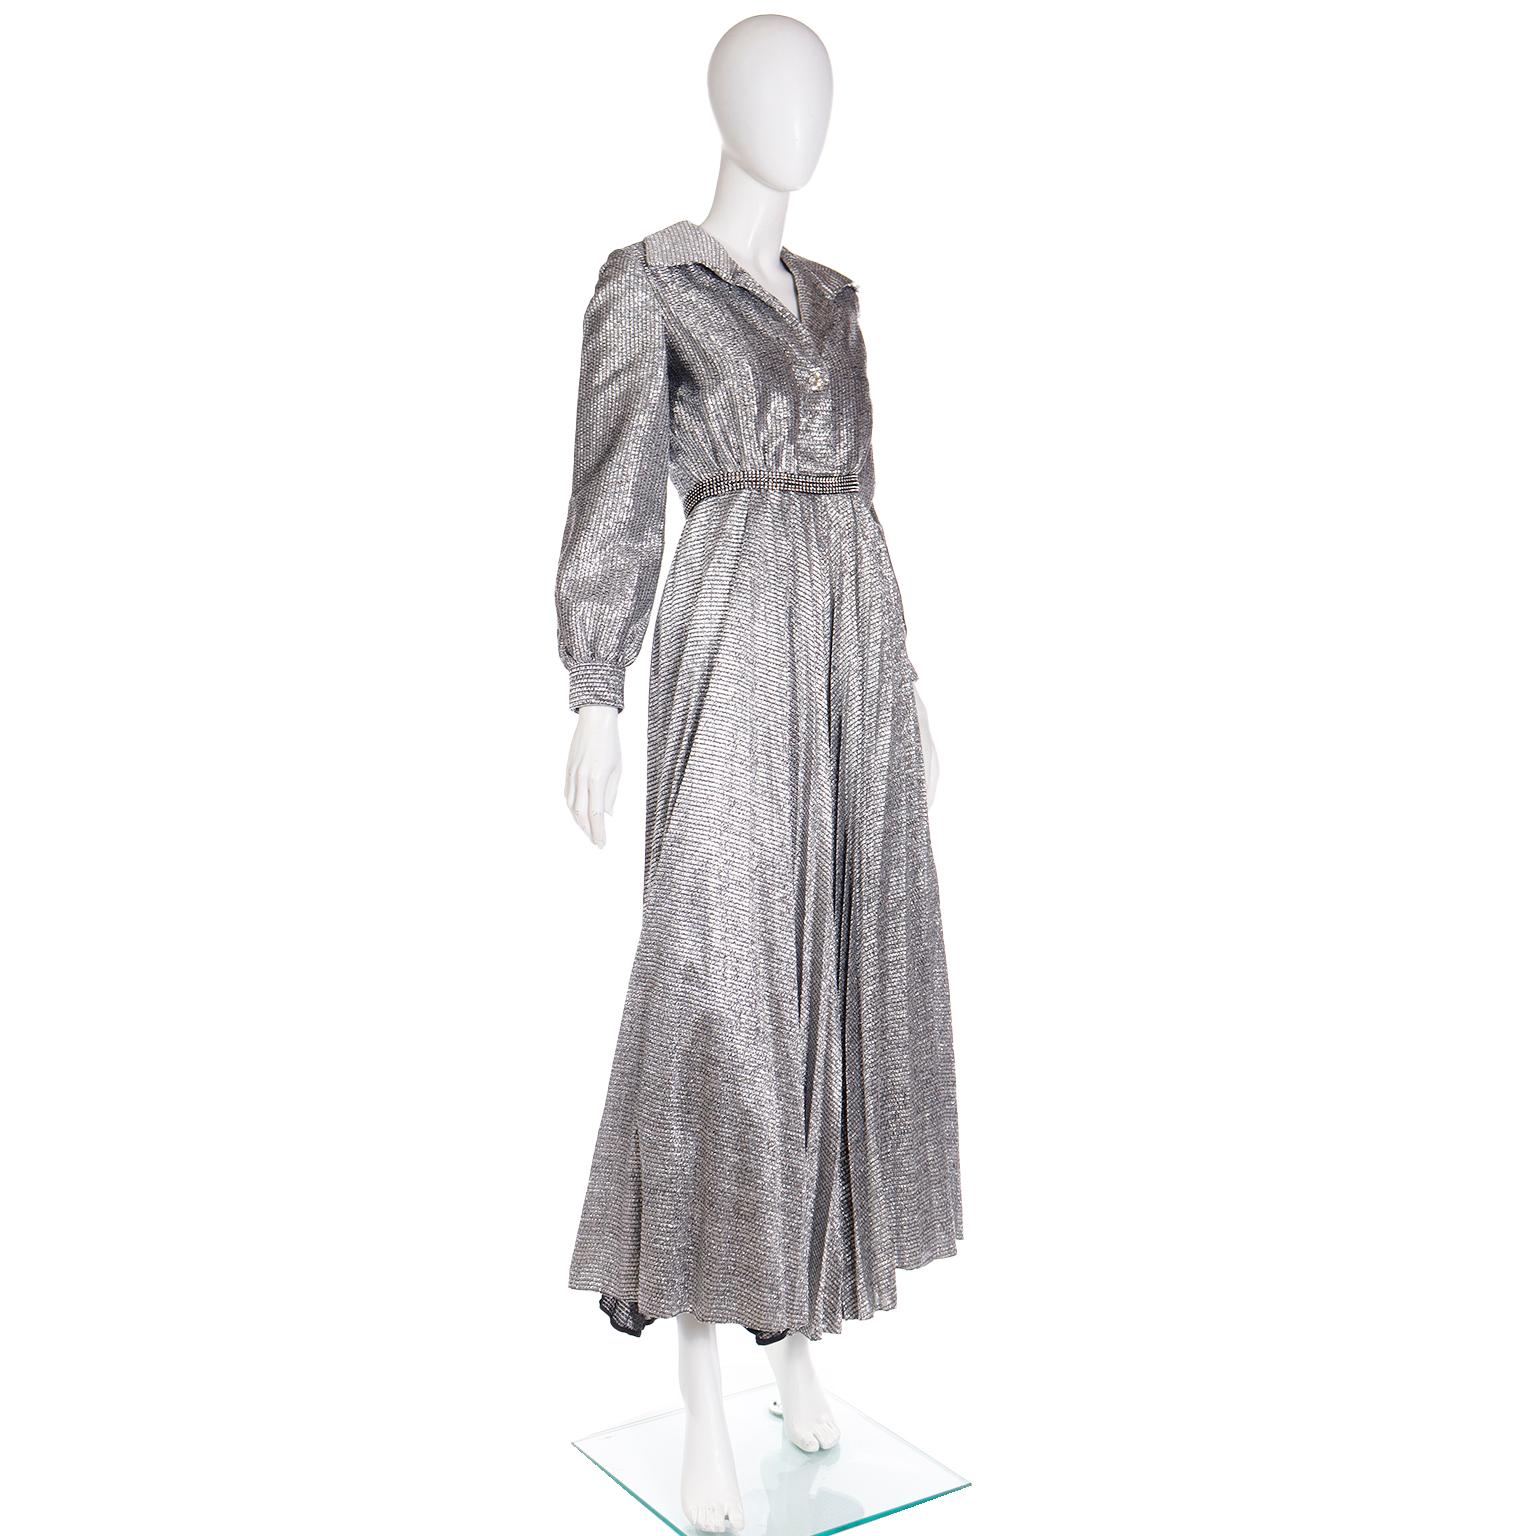 Vintage 1960s 1970s Silver Sparkle Palazzo Jumpsuit Evening Dress Alternative For Sale 6